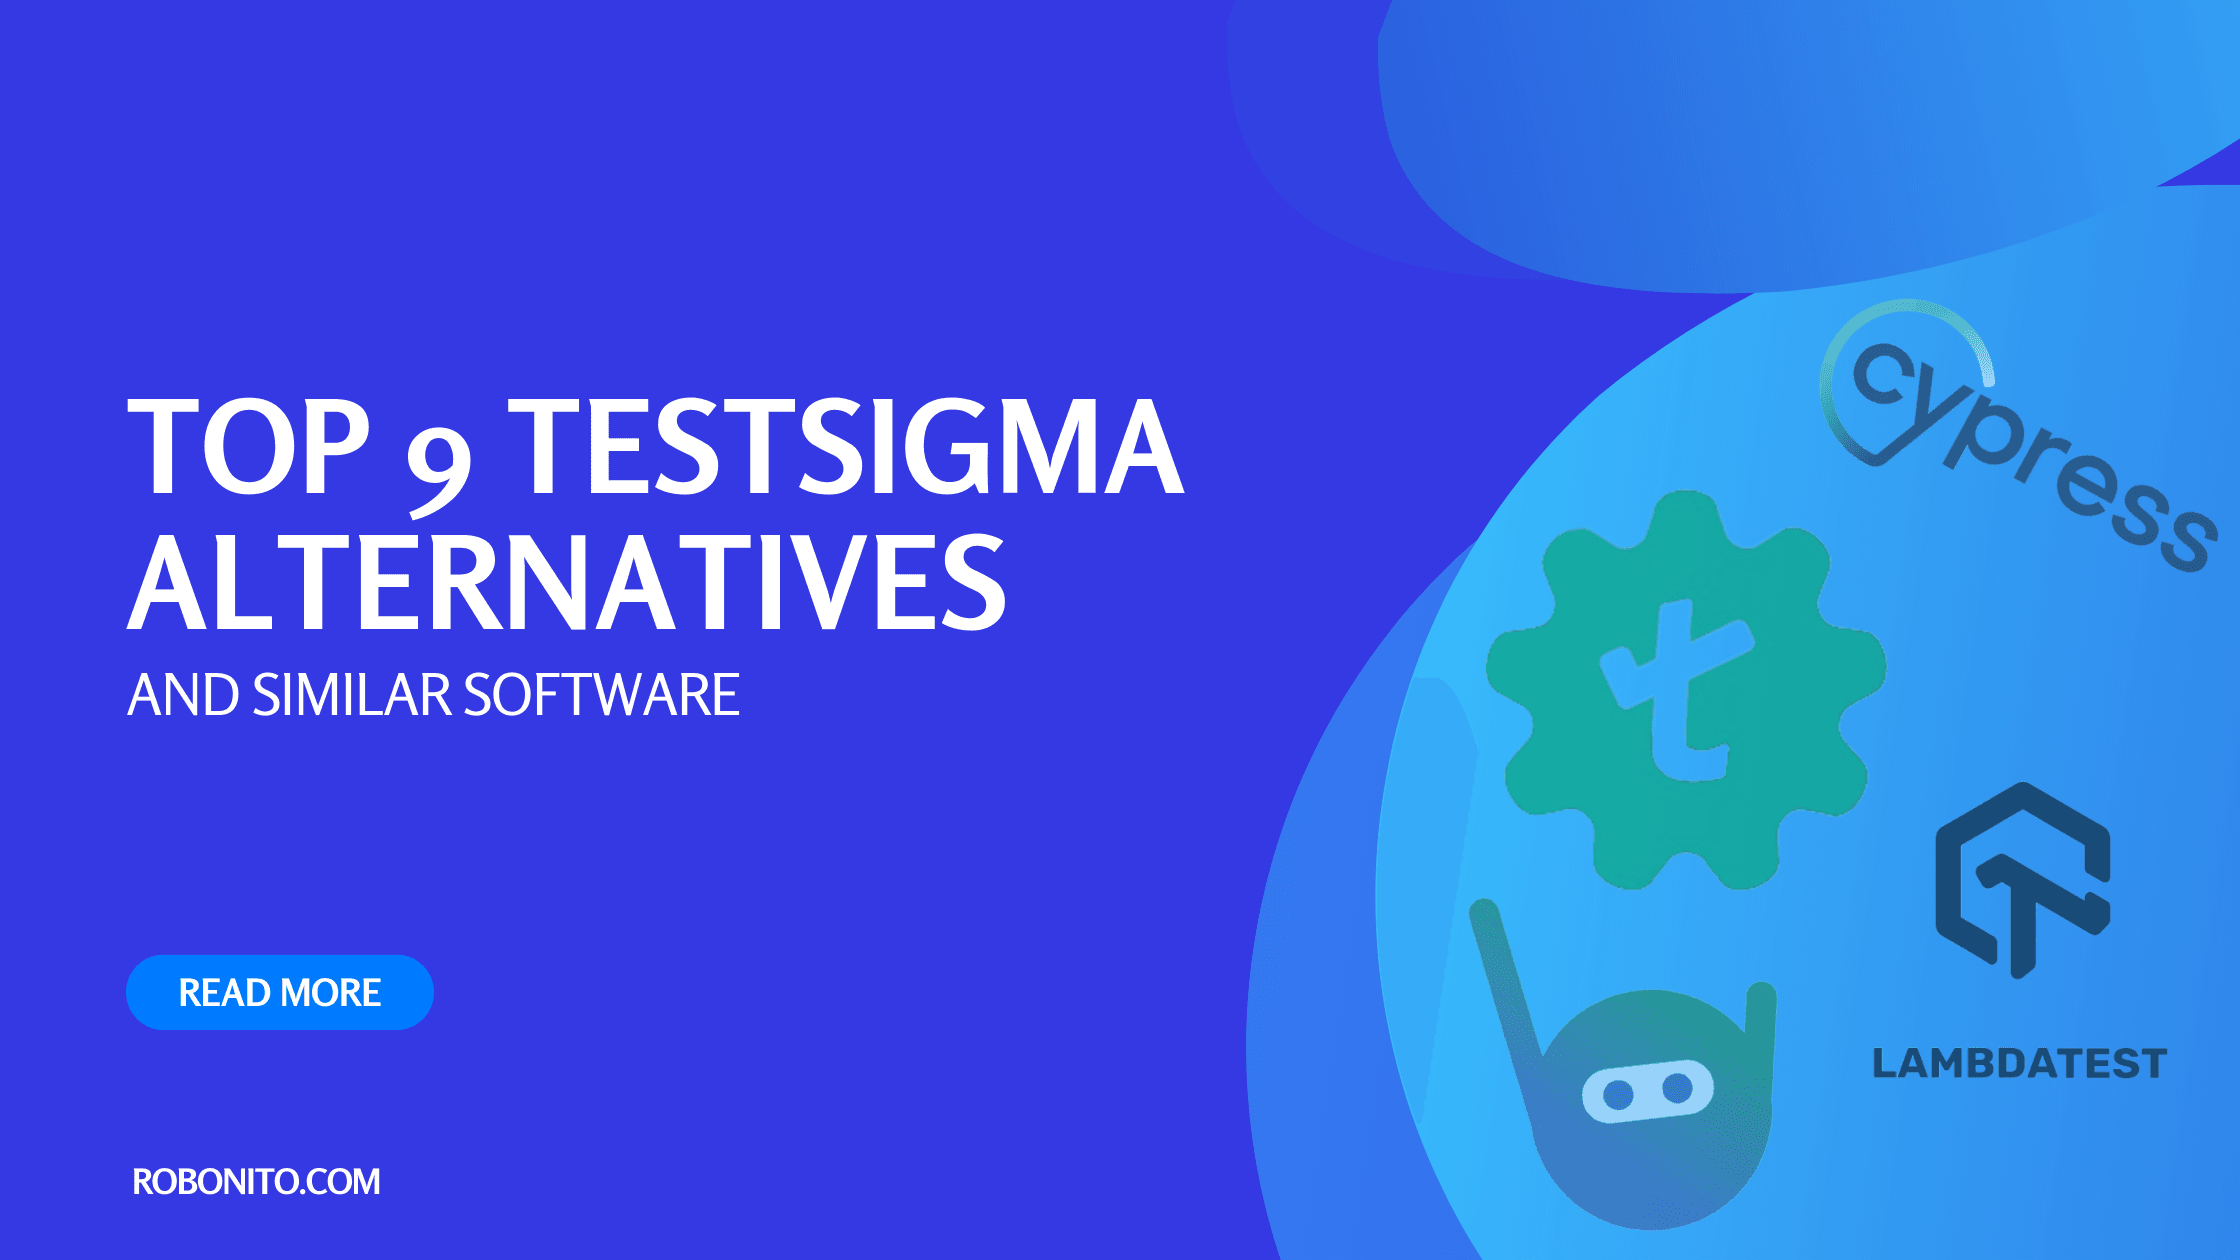 Top 9 Testsigma Alternatives